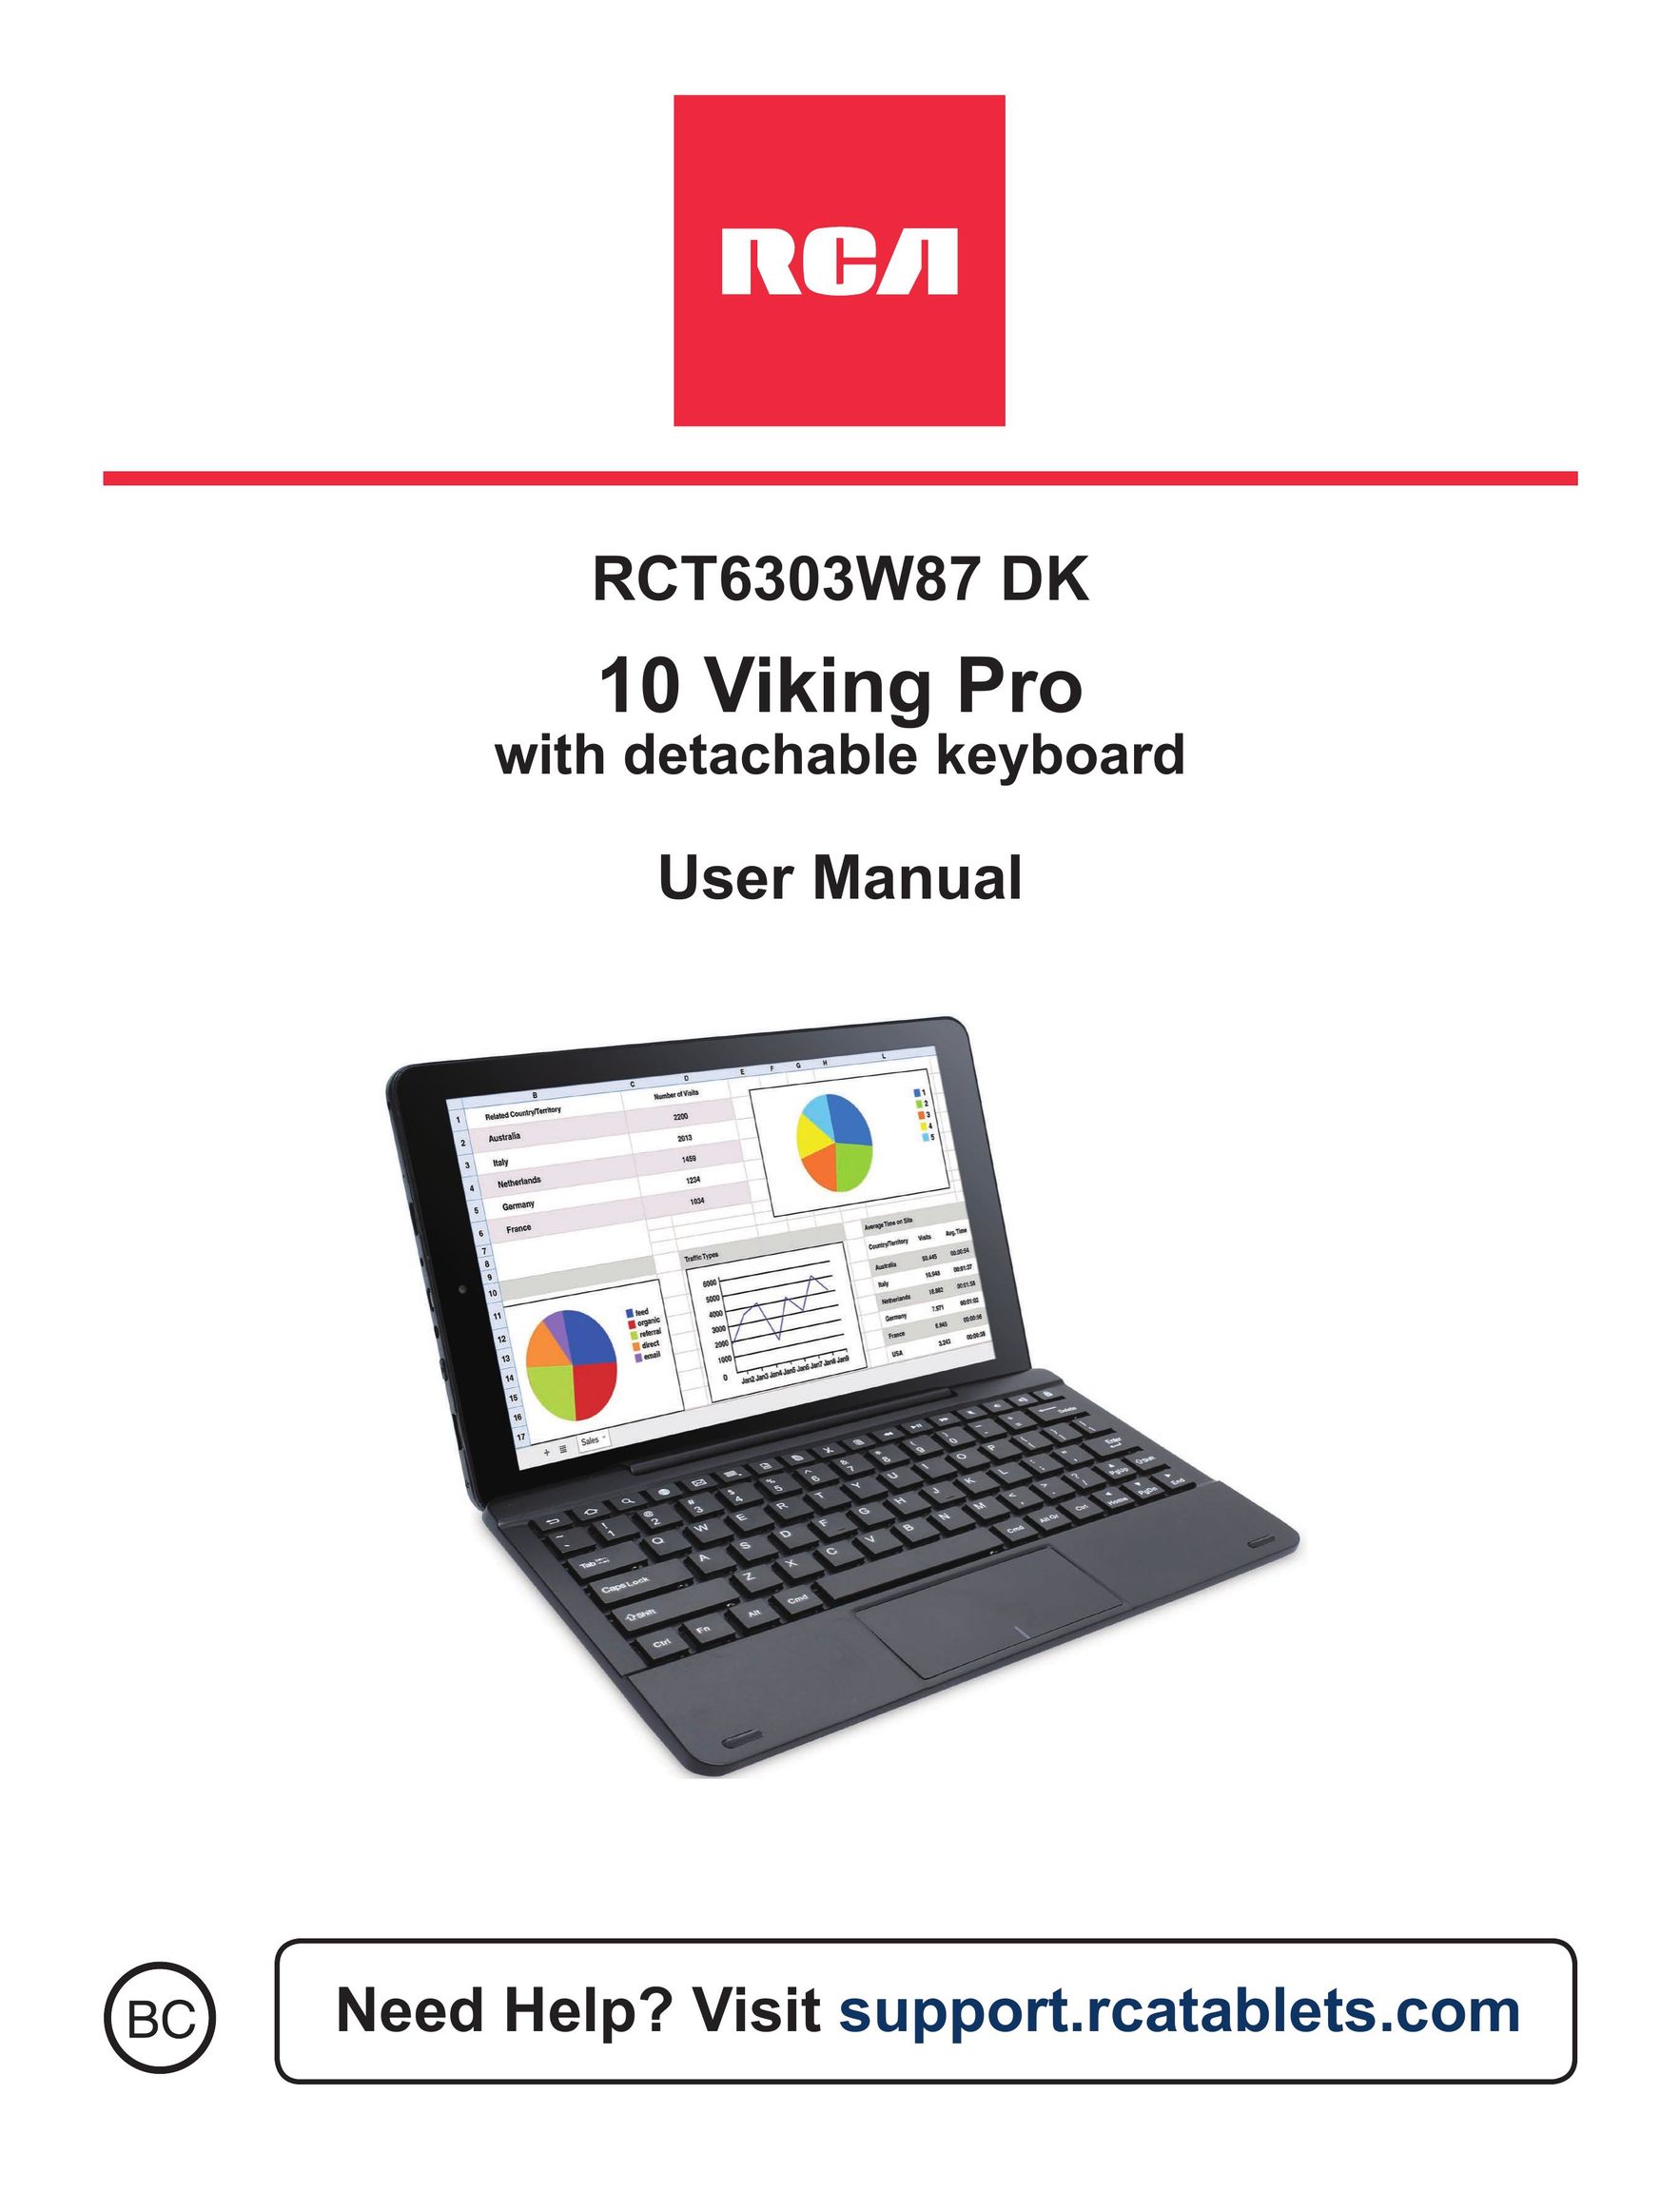 RCA RCT6303W87DK Tablet User Manual